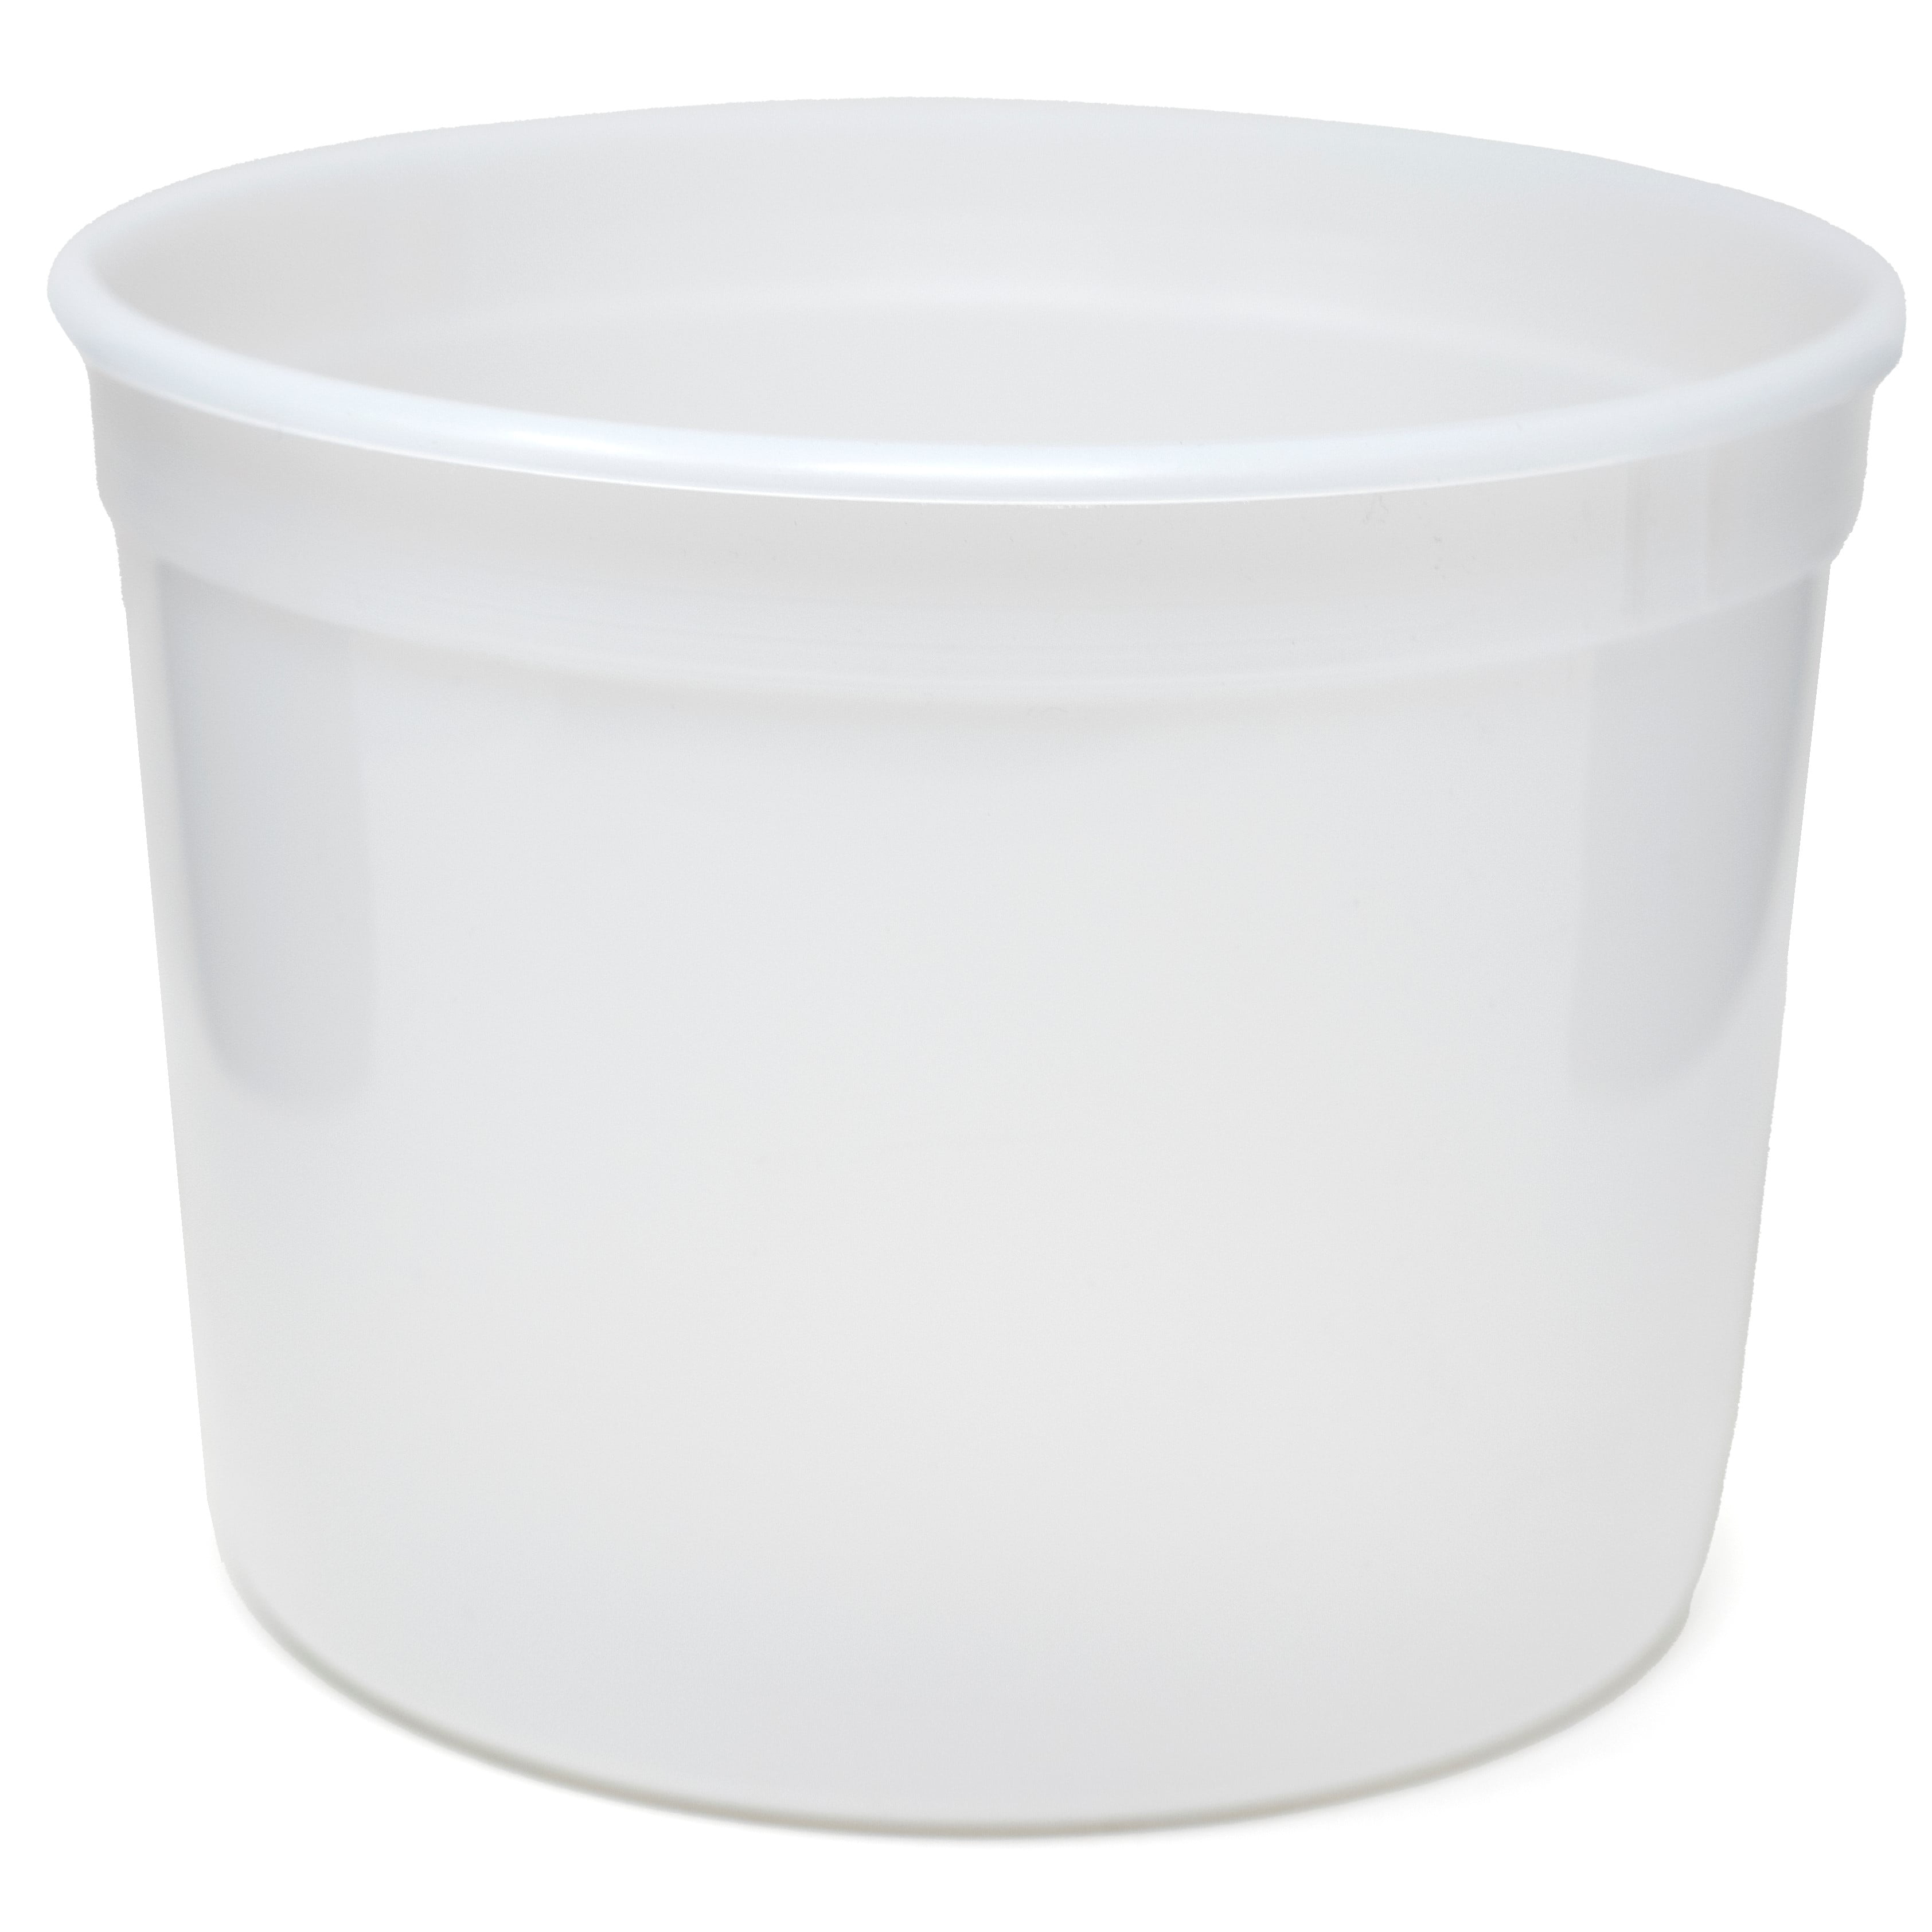 Berry Plastics Corp. White Plastic Container 64 oz. T60764 - 200/Case